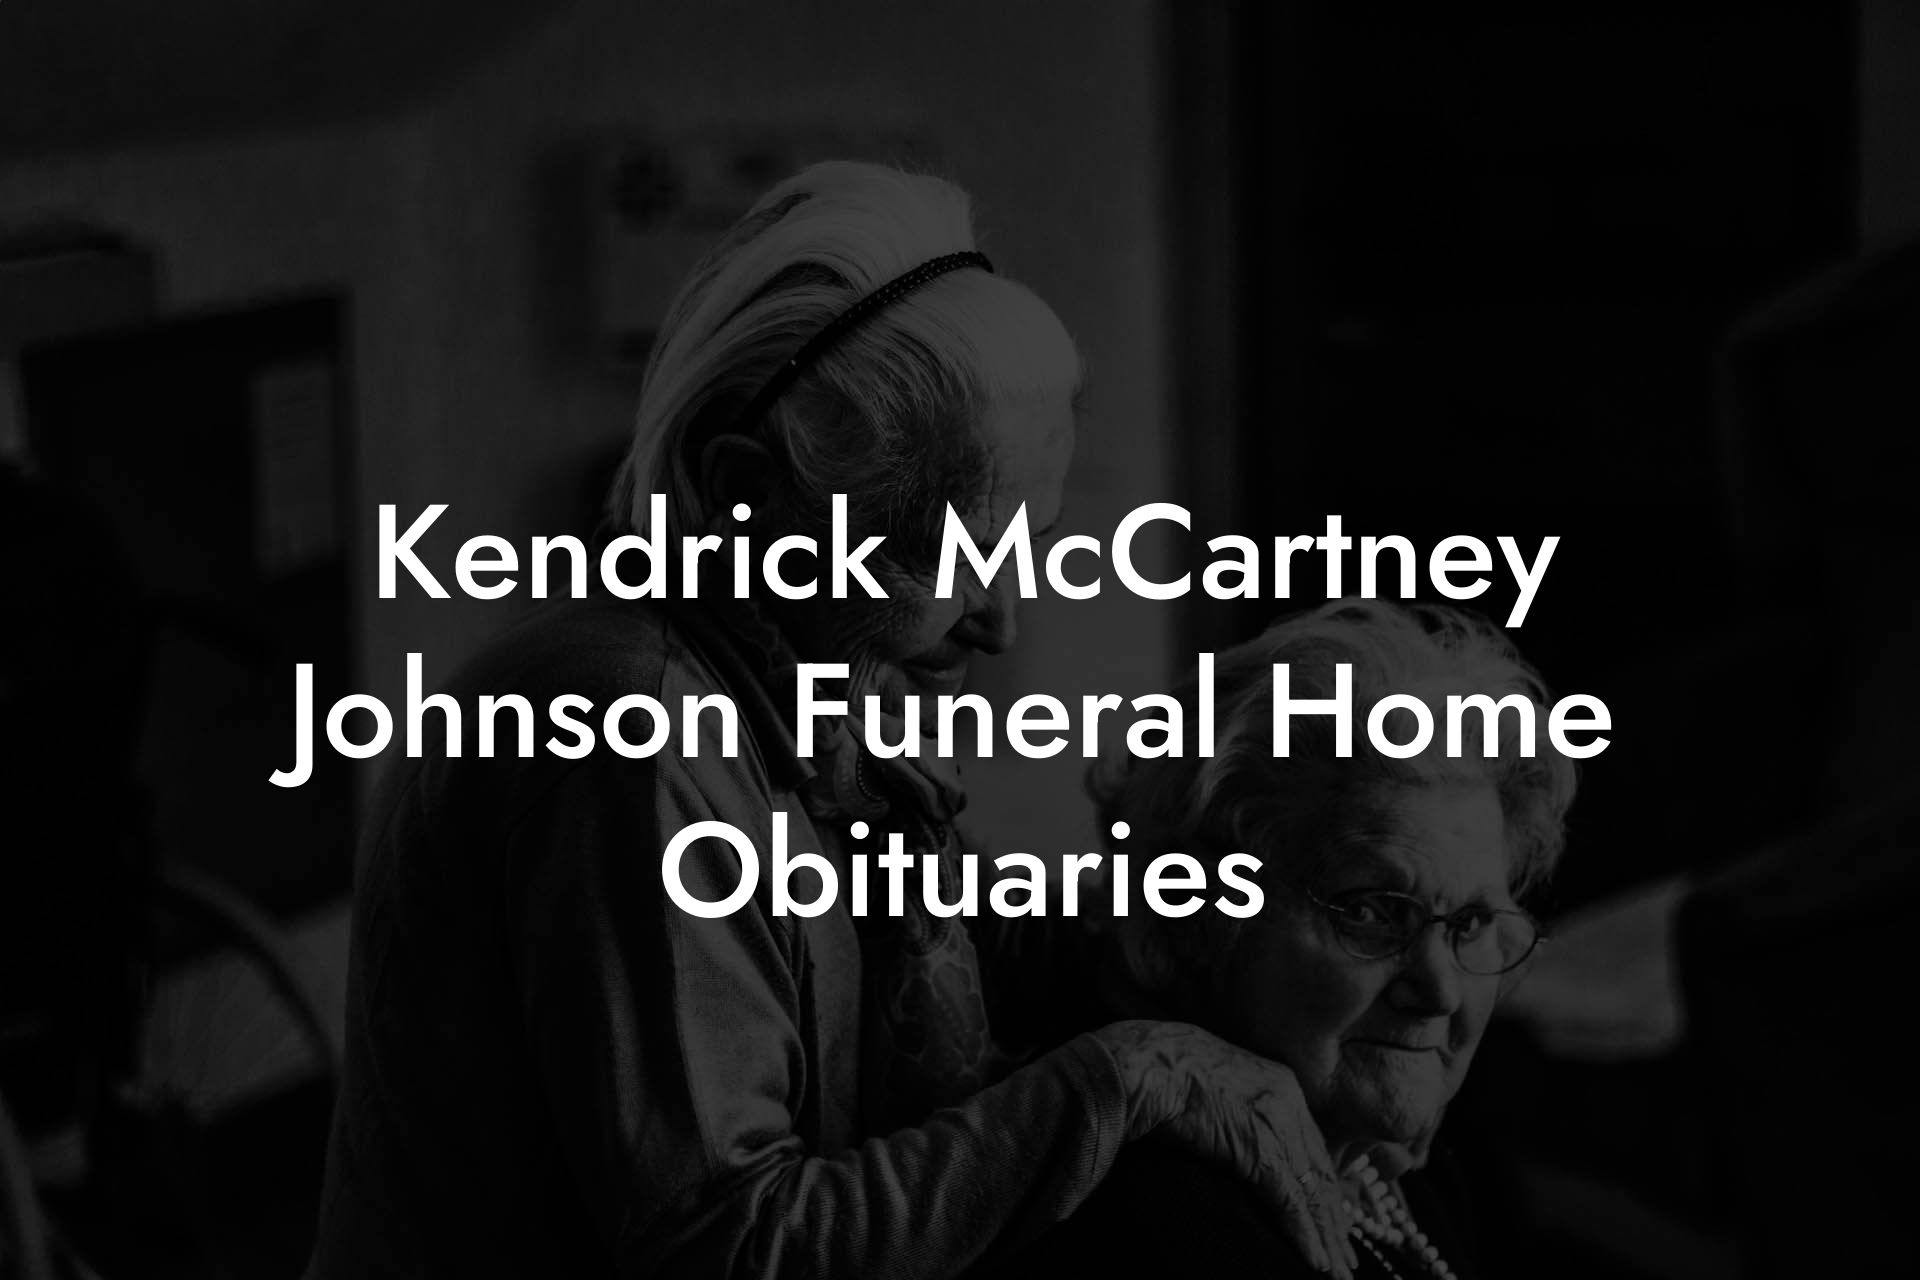 Kendrick McCartney Johnson Funeral Home Obituaries